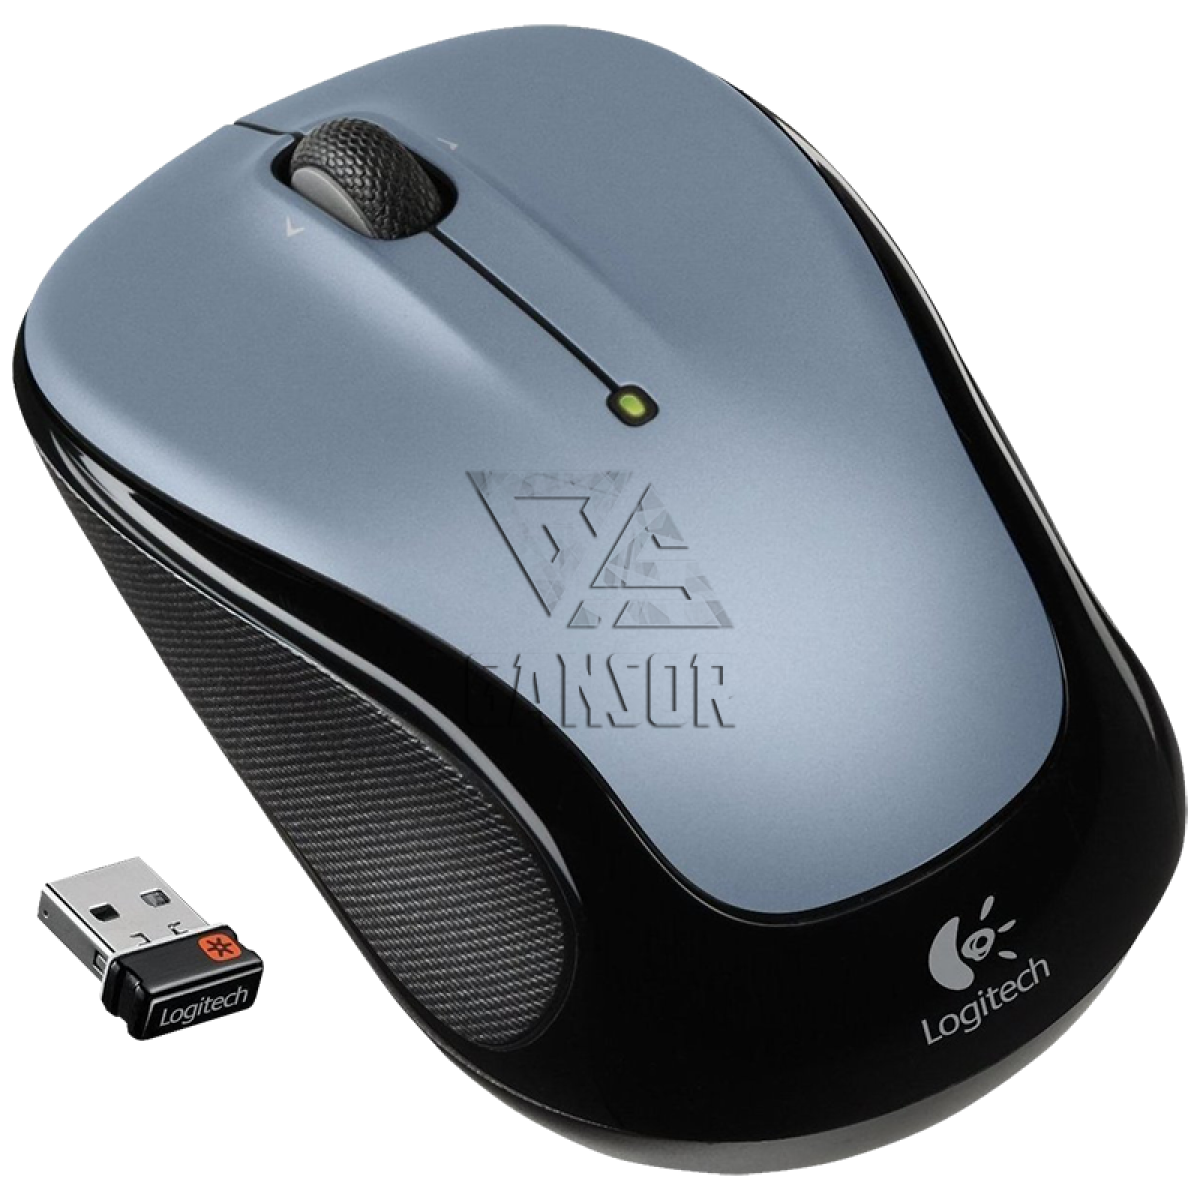 Er 12 325 m1. Logitech Wireless Mouse m325. Logitech беспроводная мышь ь325. Logitech m325 Limited. Мышь беспроводная Logitech m325 Dark Silver.